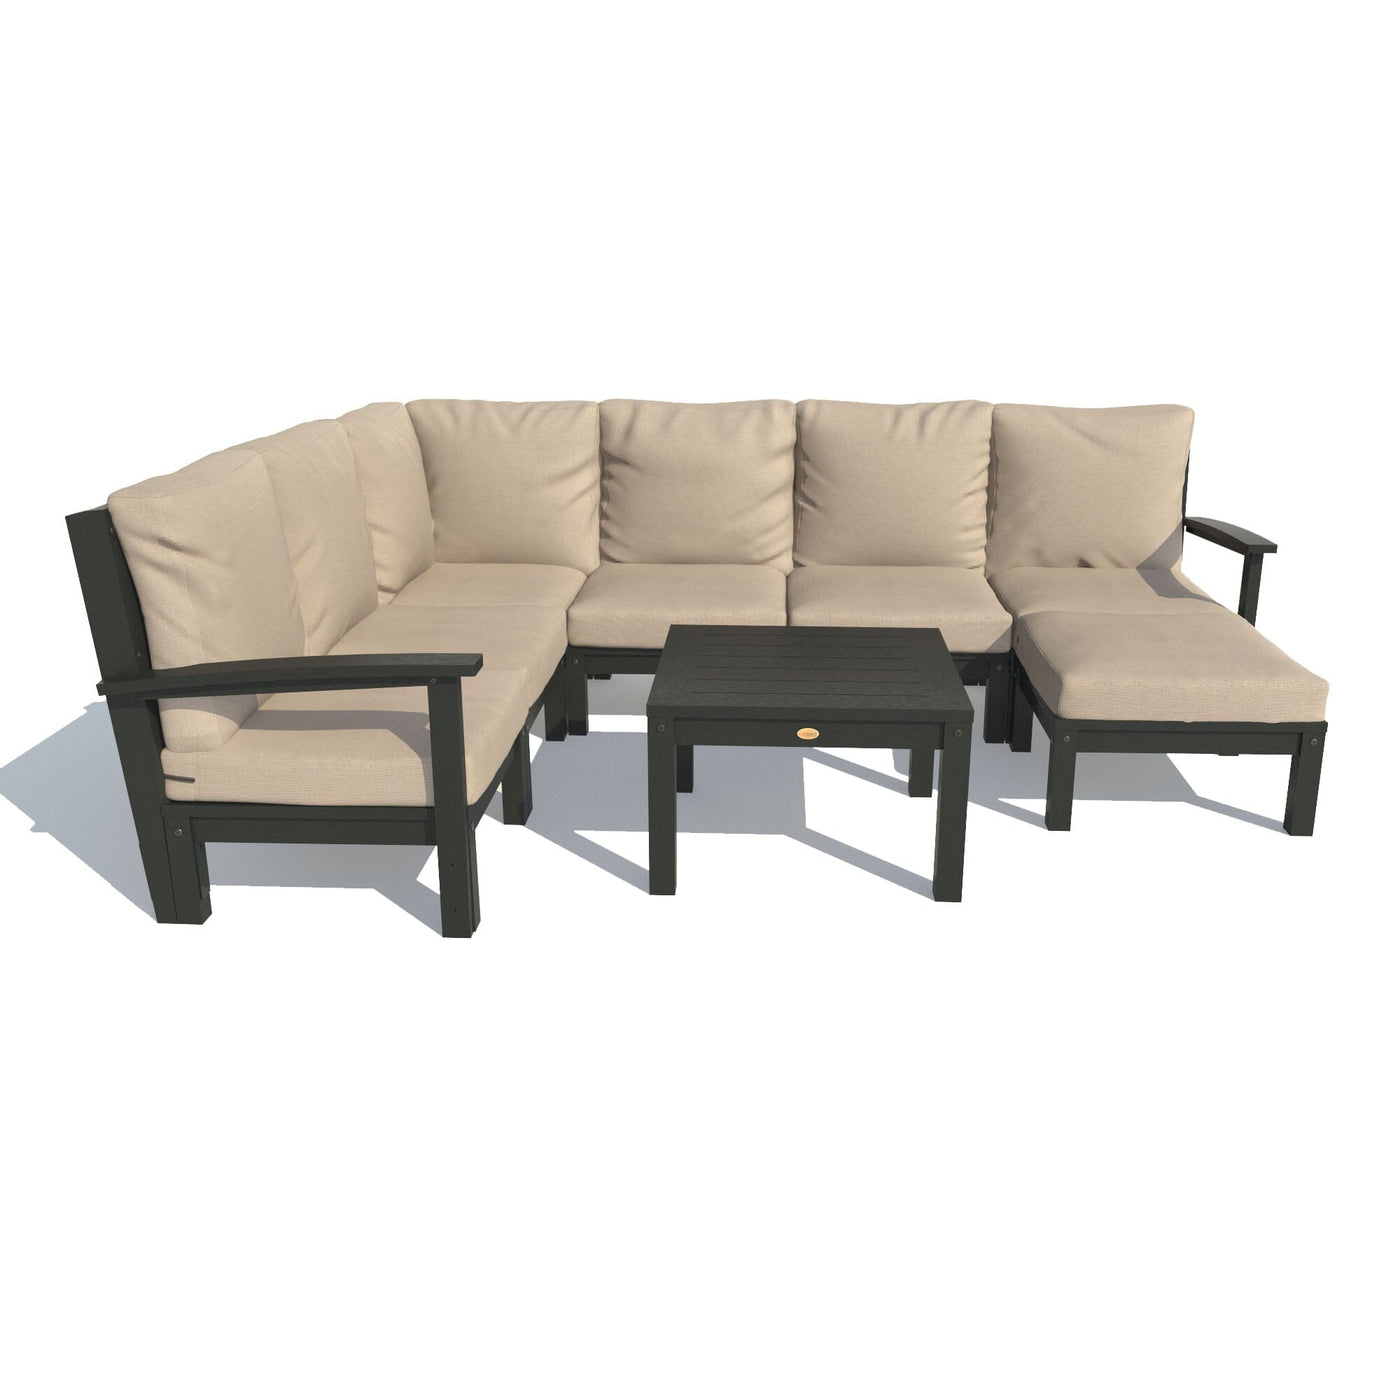 Bespoke Deep Seating: 8 Piece Sectional Sofa Set with Ottoman and Side Table Deep Seating Highwood USA Driftwood Black 